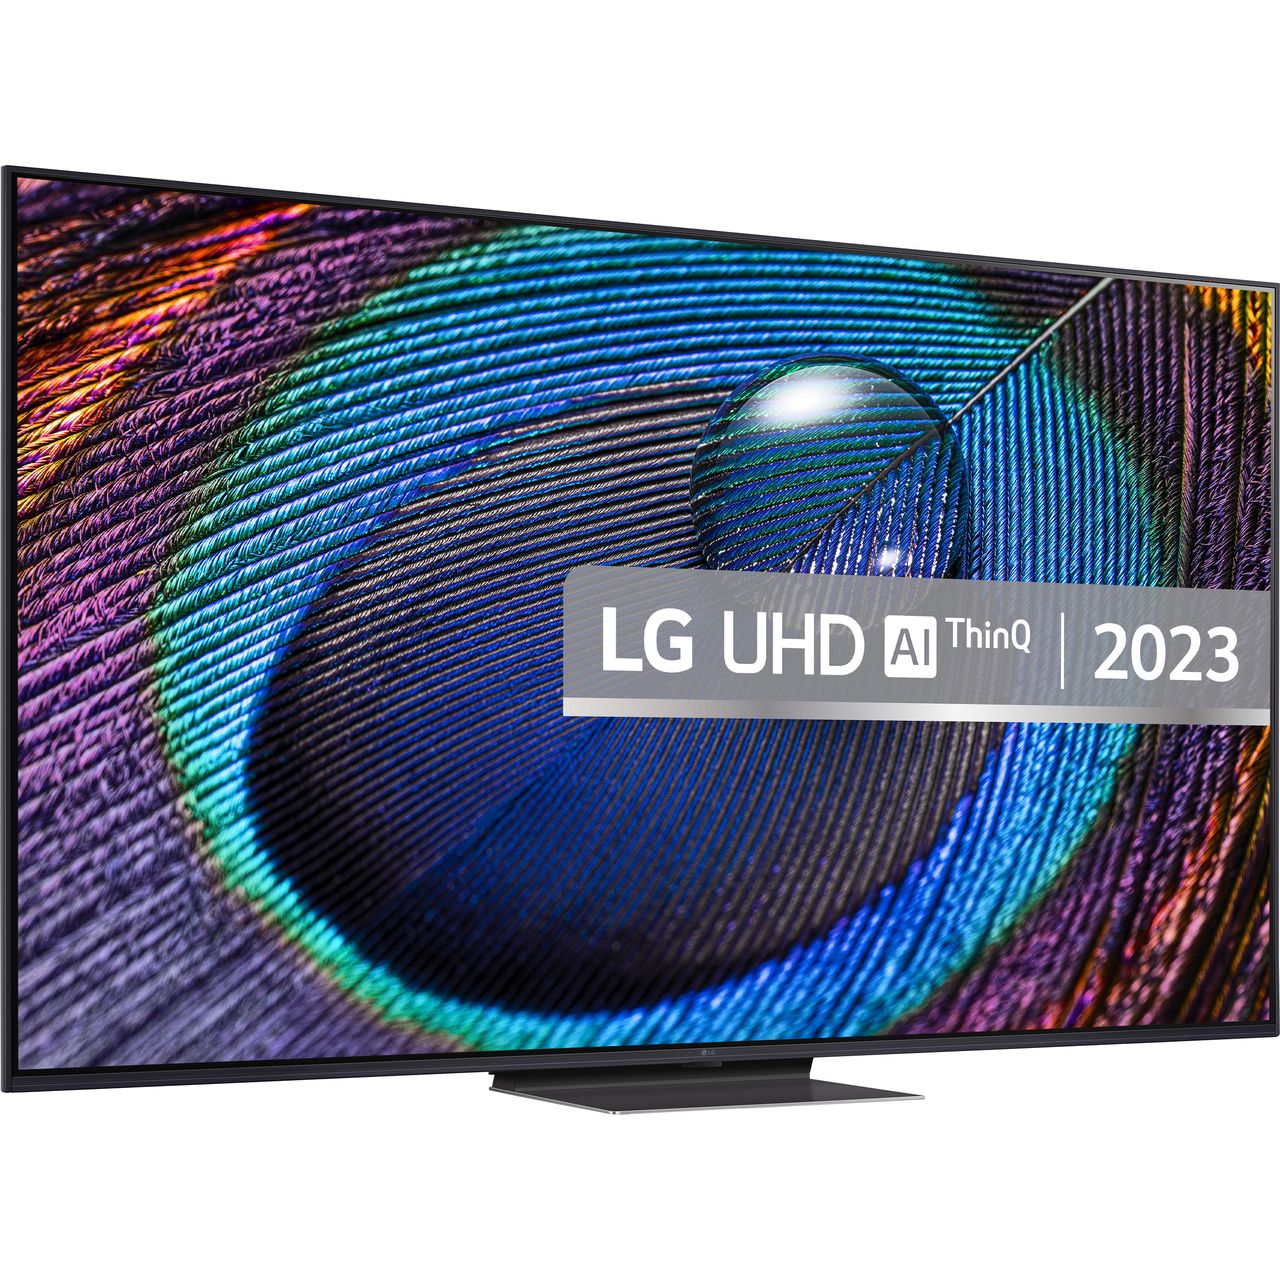 LG OLED TV 65 65A1 SMART TV 4K UHD IPS HDR HDMI USB TDA